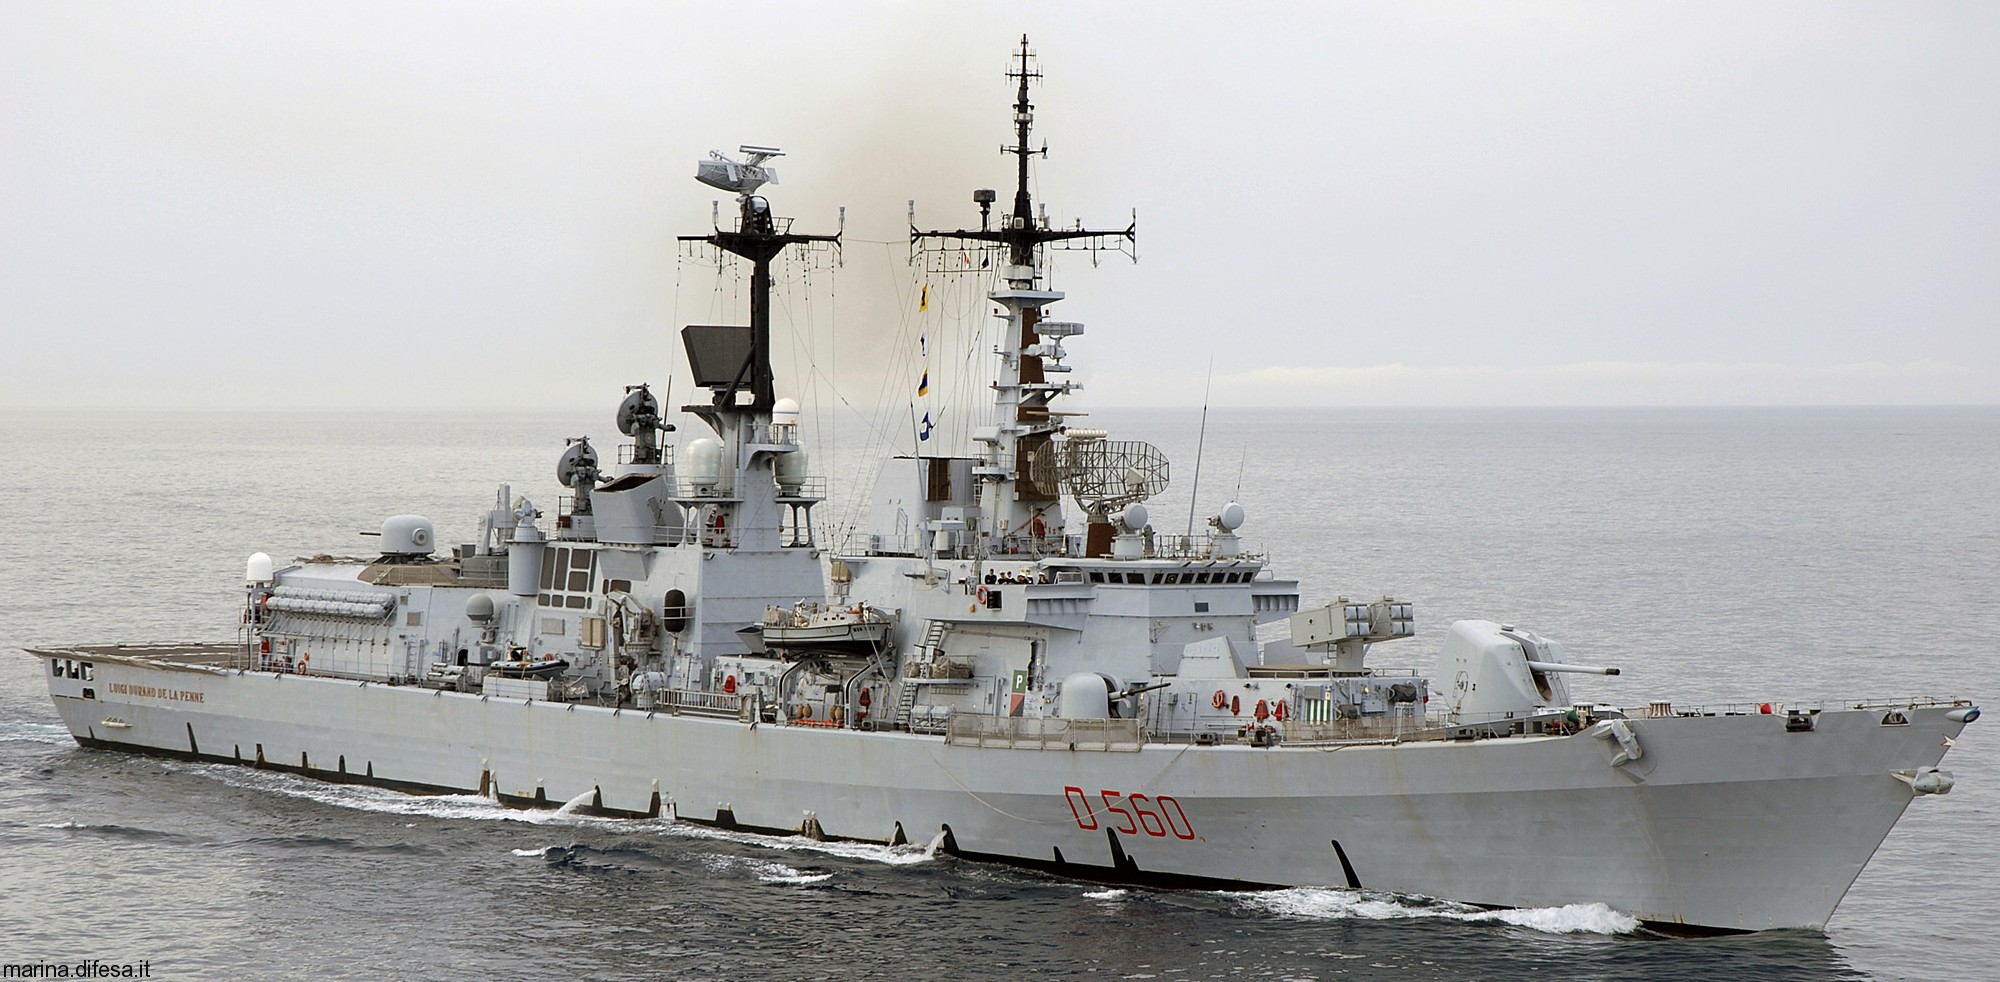 d-560 luigi durand de la penne its nave guided missile destroyer ddg italian navy marina militare 48